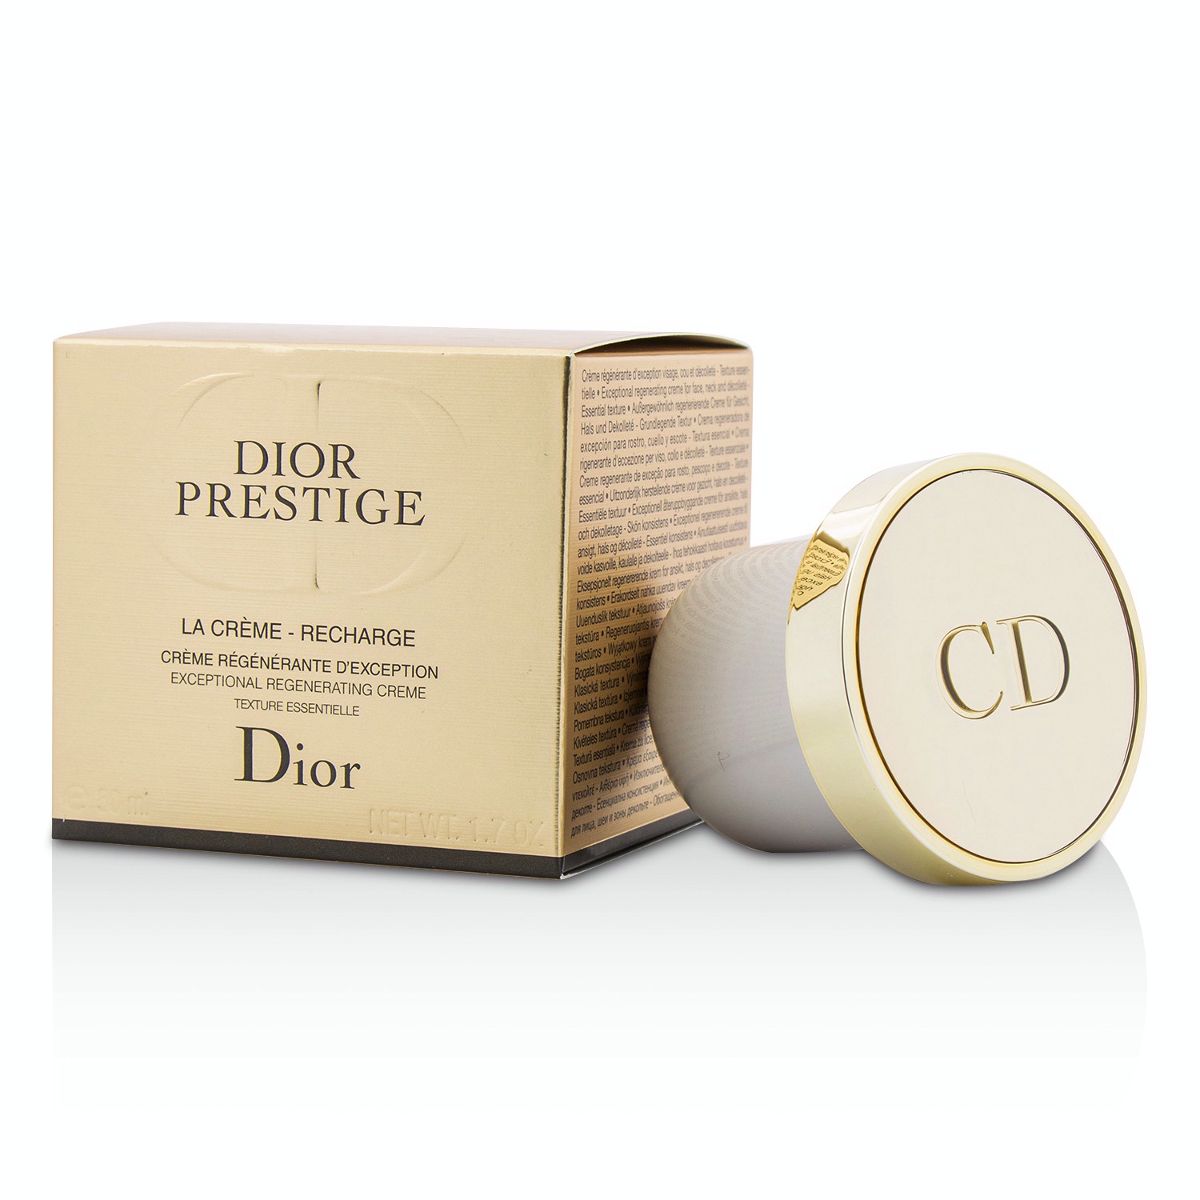 Prestige La Creme Exceptional Regenerating Creme - Recharge Christian Dior Image